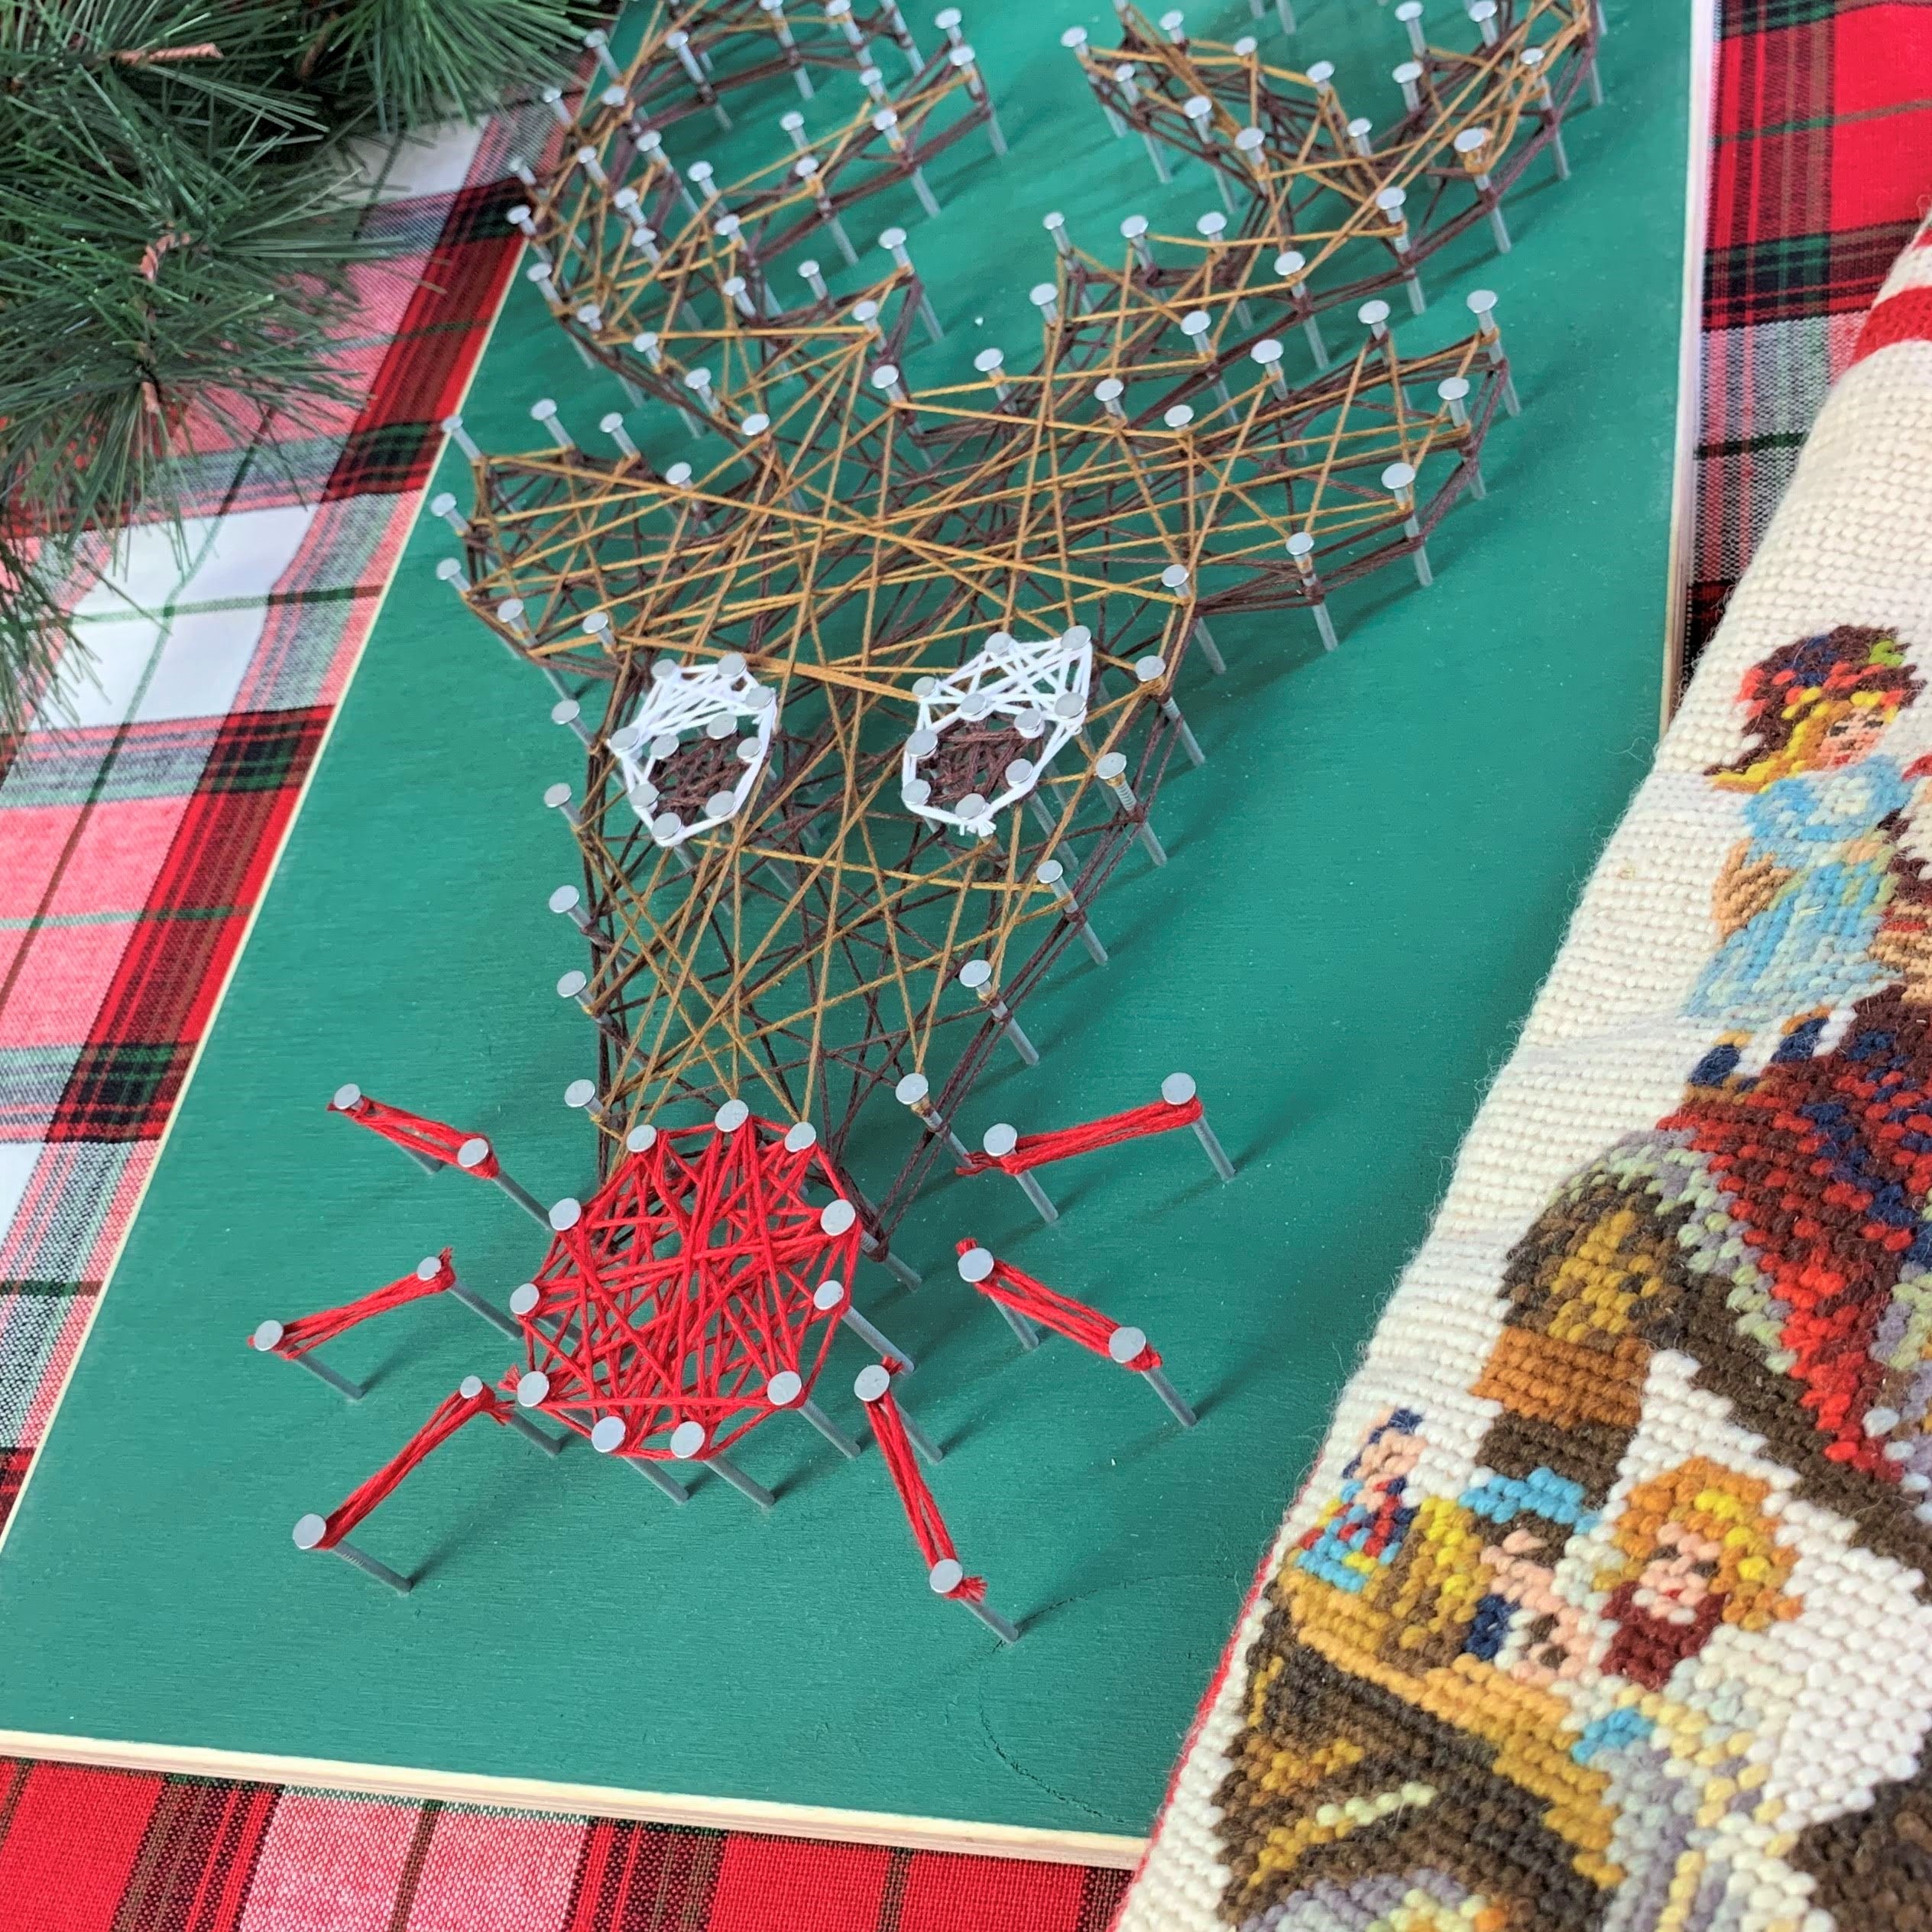 Christmas Tree String Art Kit